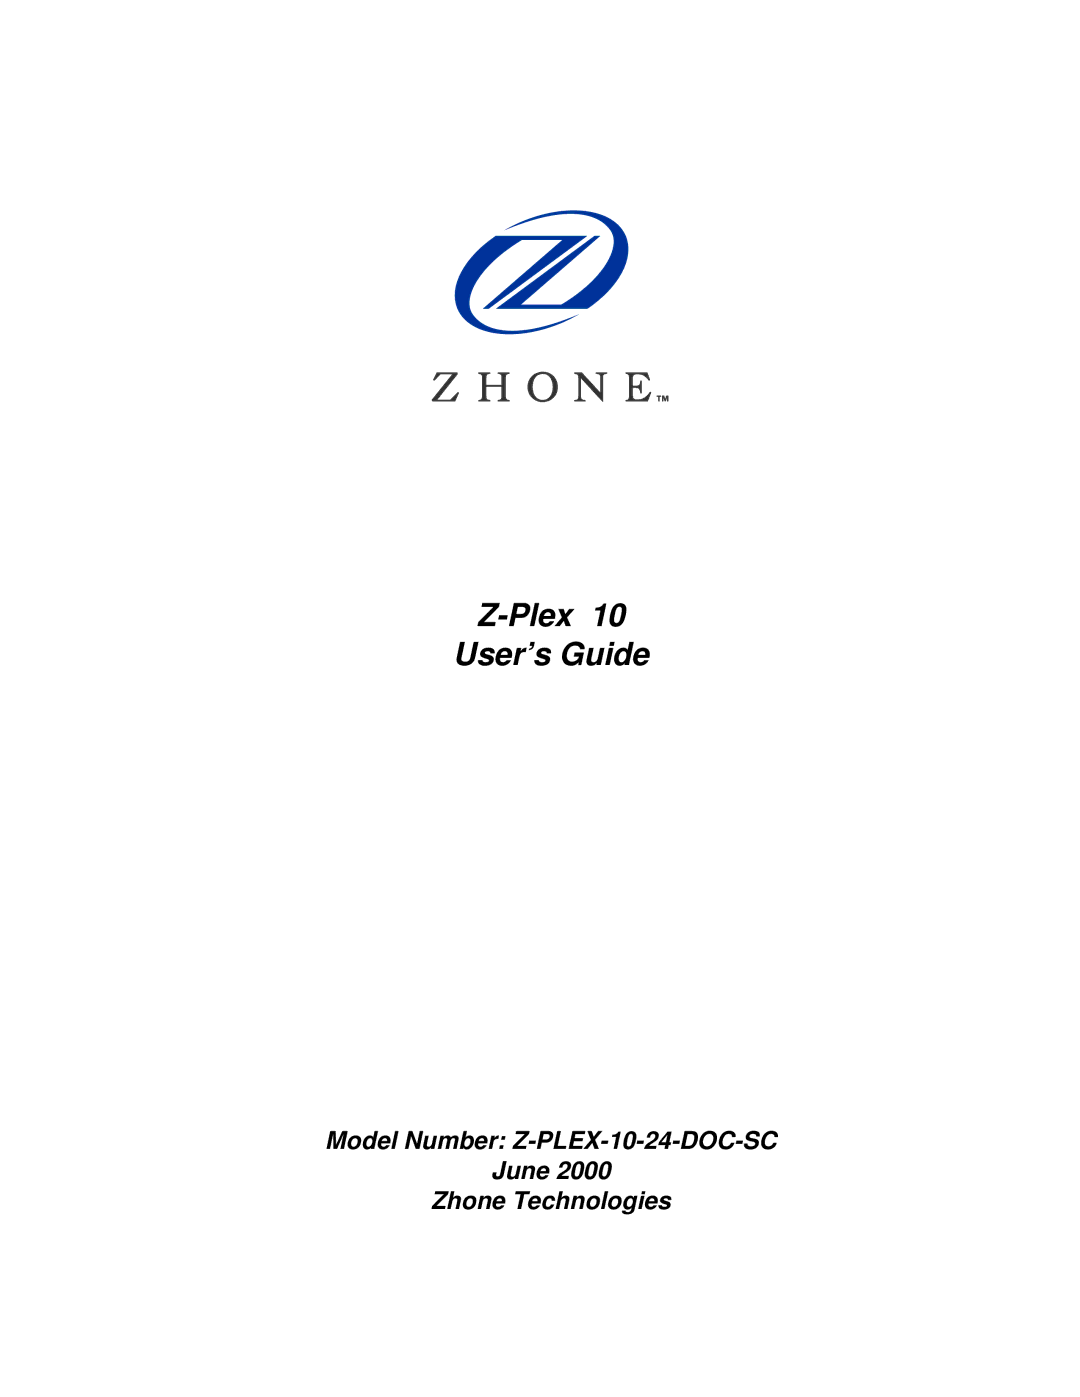 Zhone Technologies Z-PLEX-10-24-DOC-SC manual Plex User’s Guide 